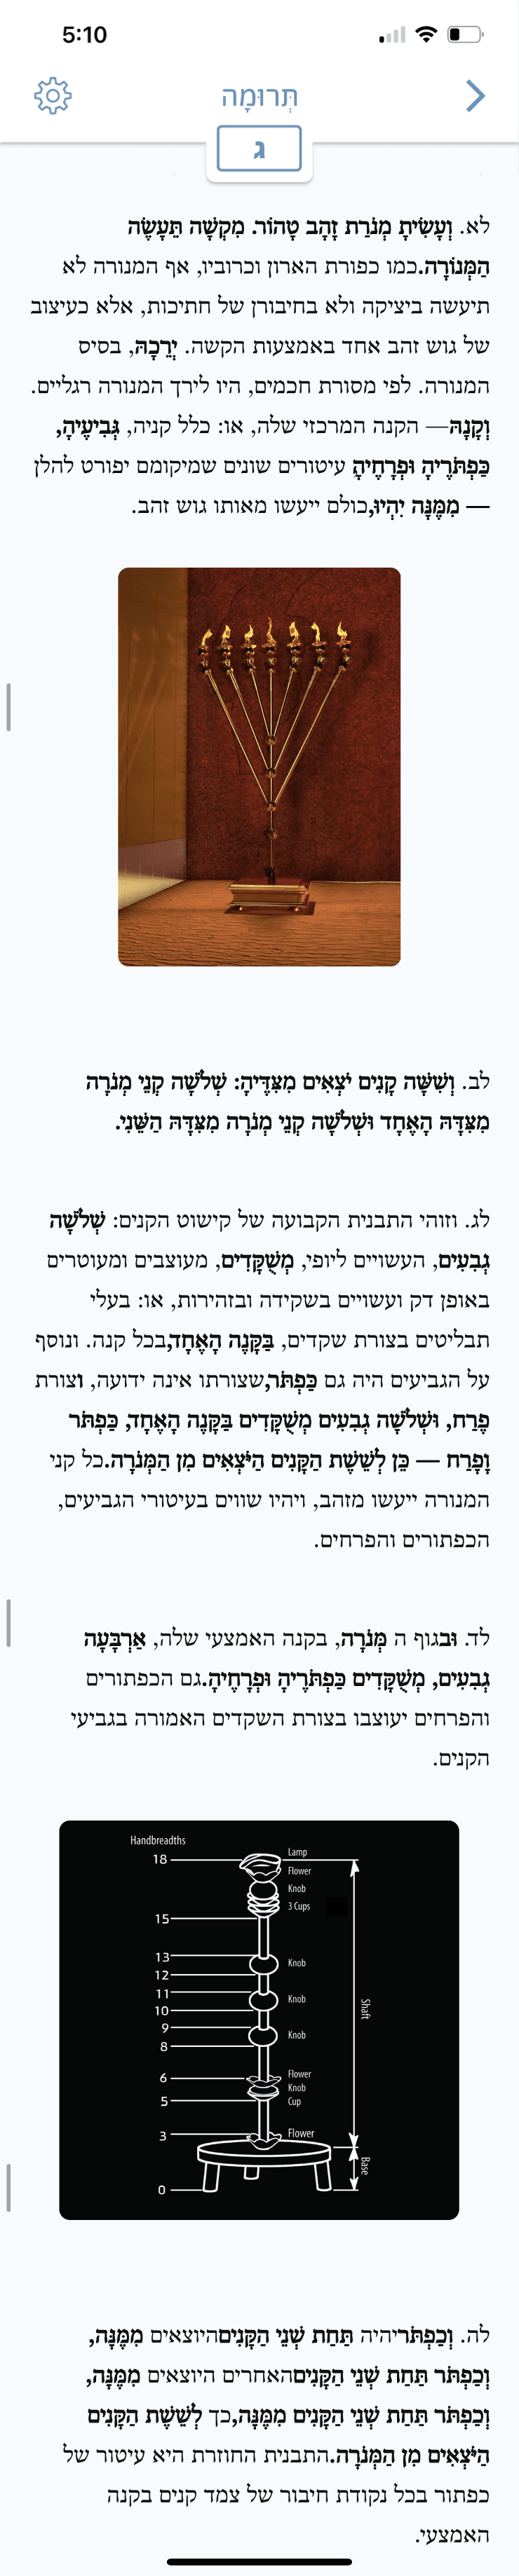 book 4 hebrew